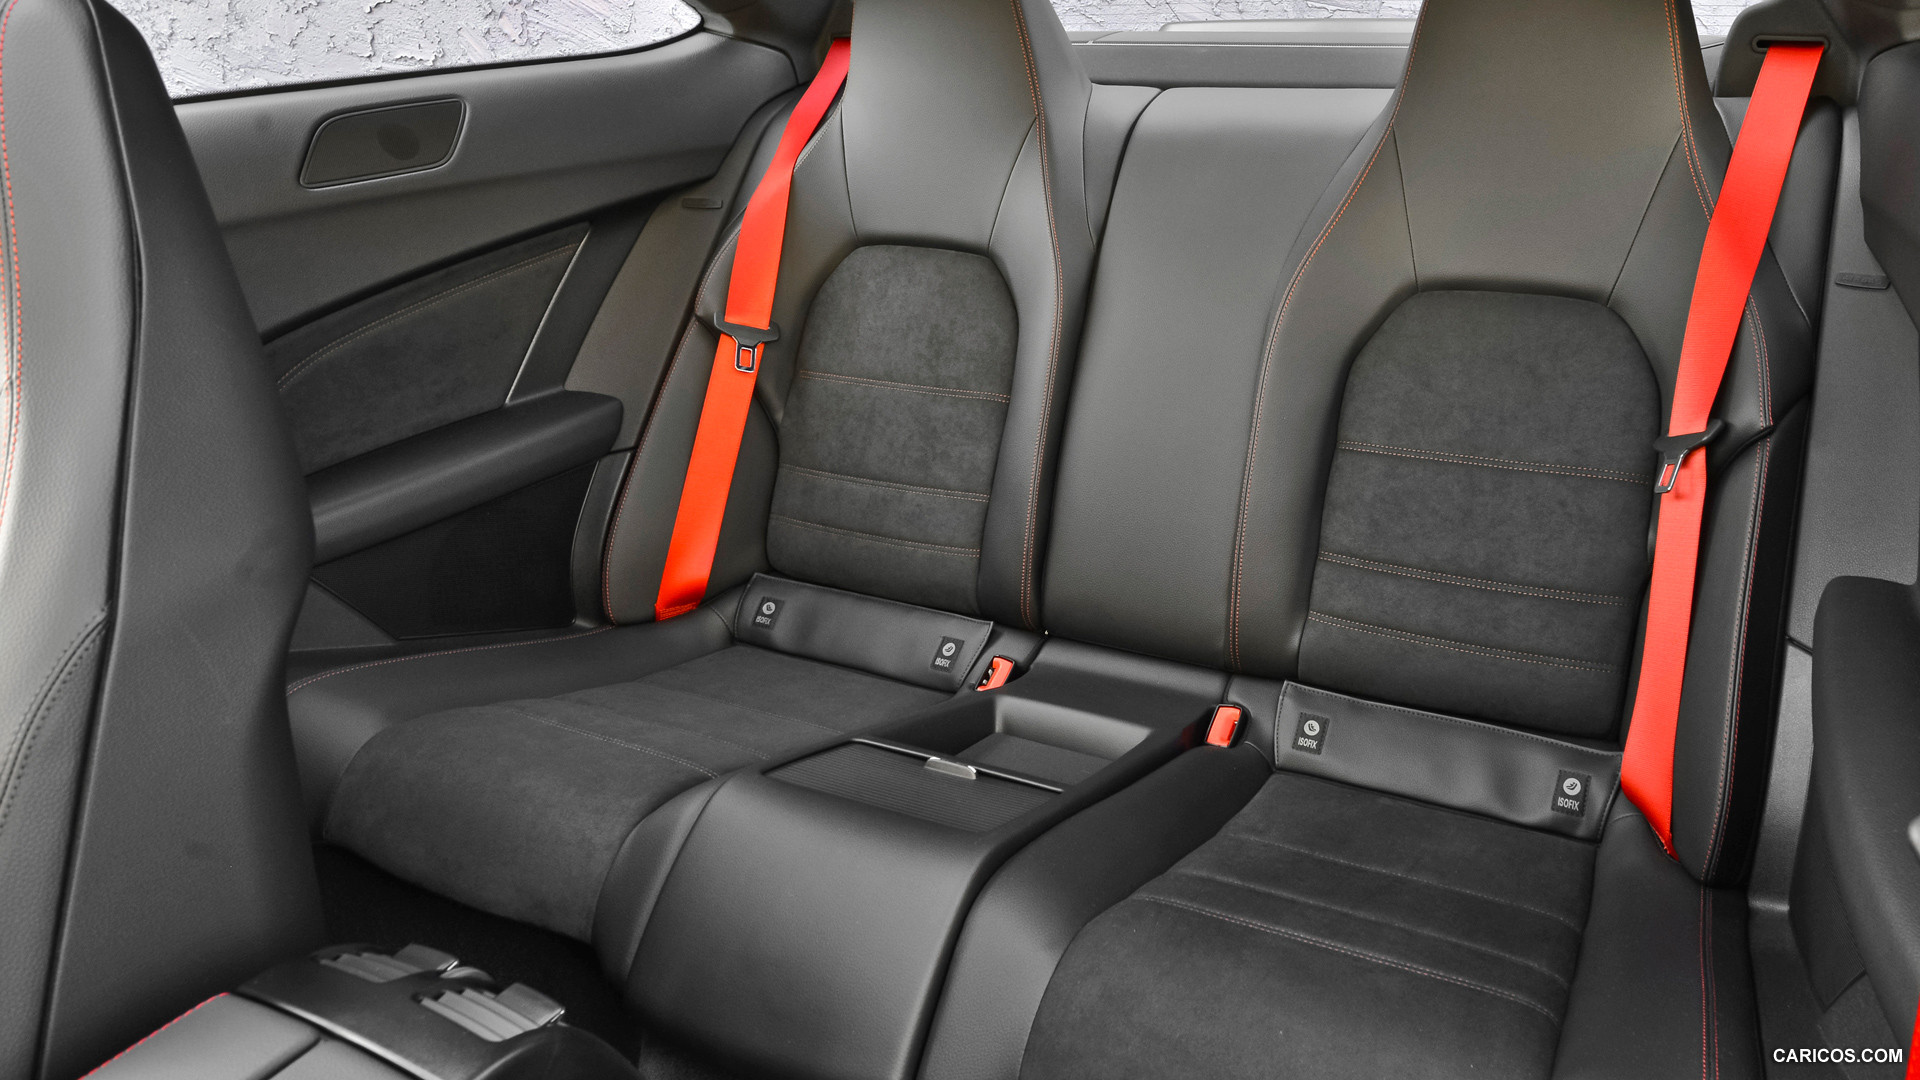 Mercedes Benz C250 Coupe 2013 Interior Rear Seats Hd